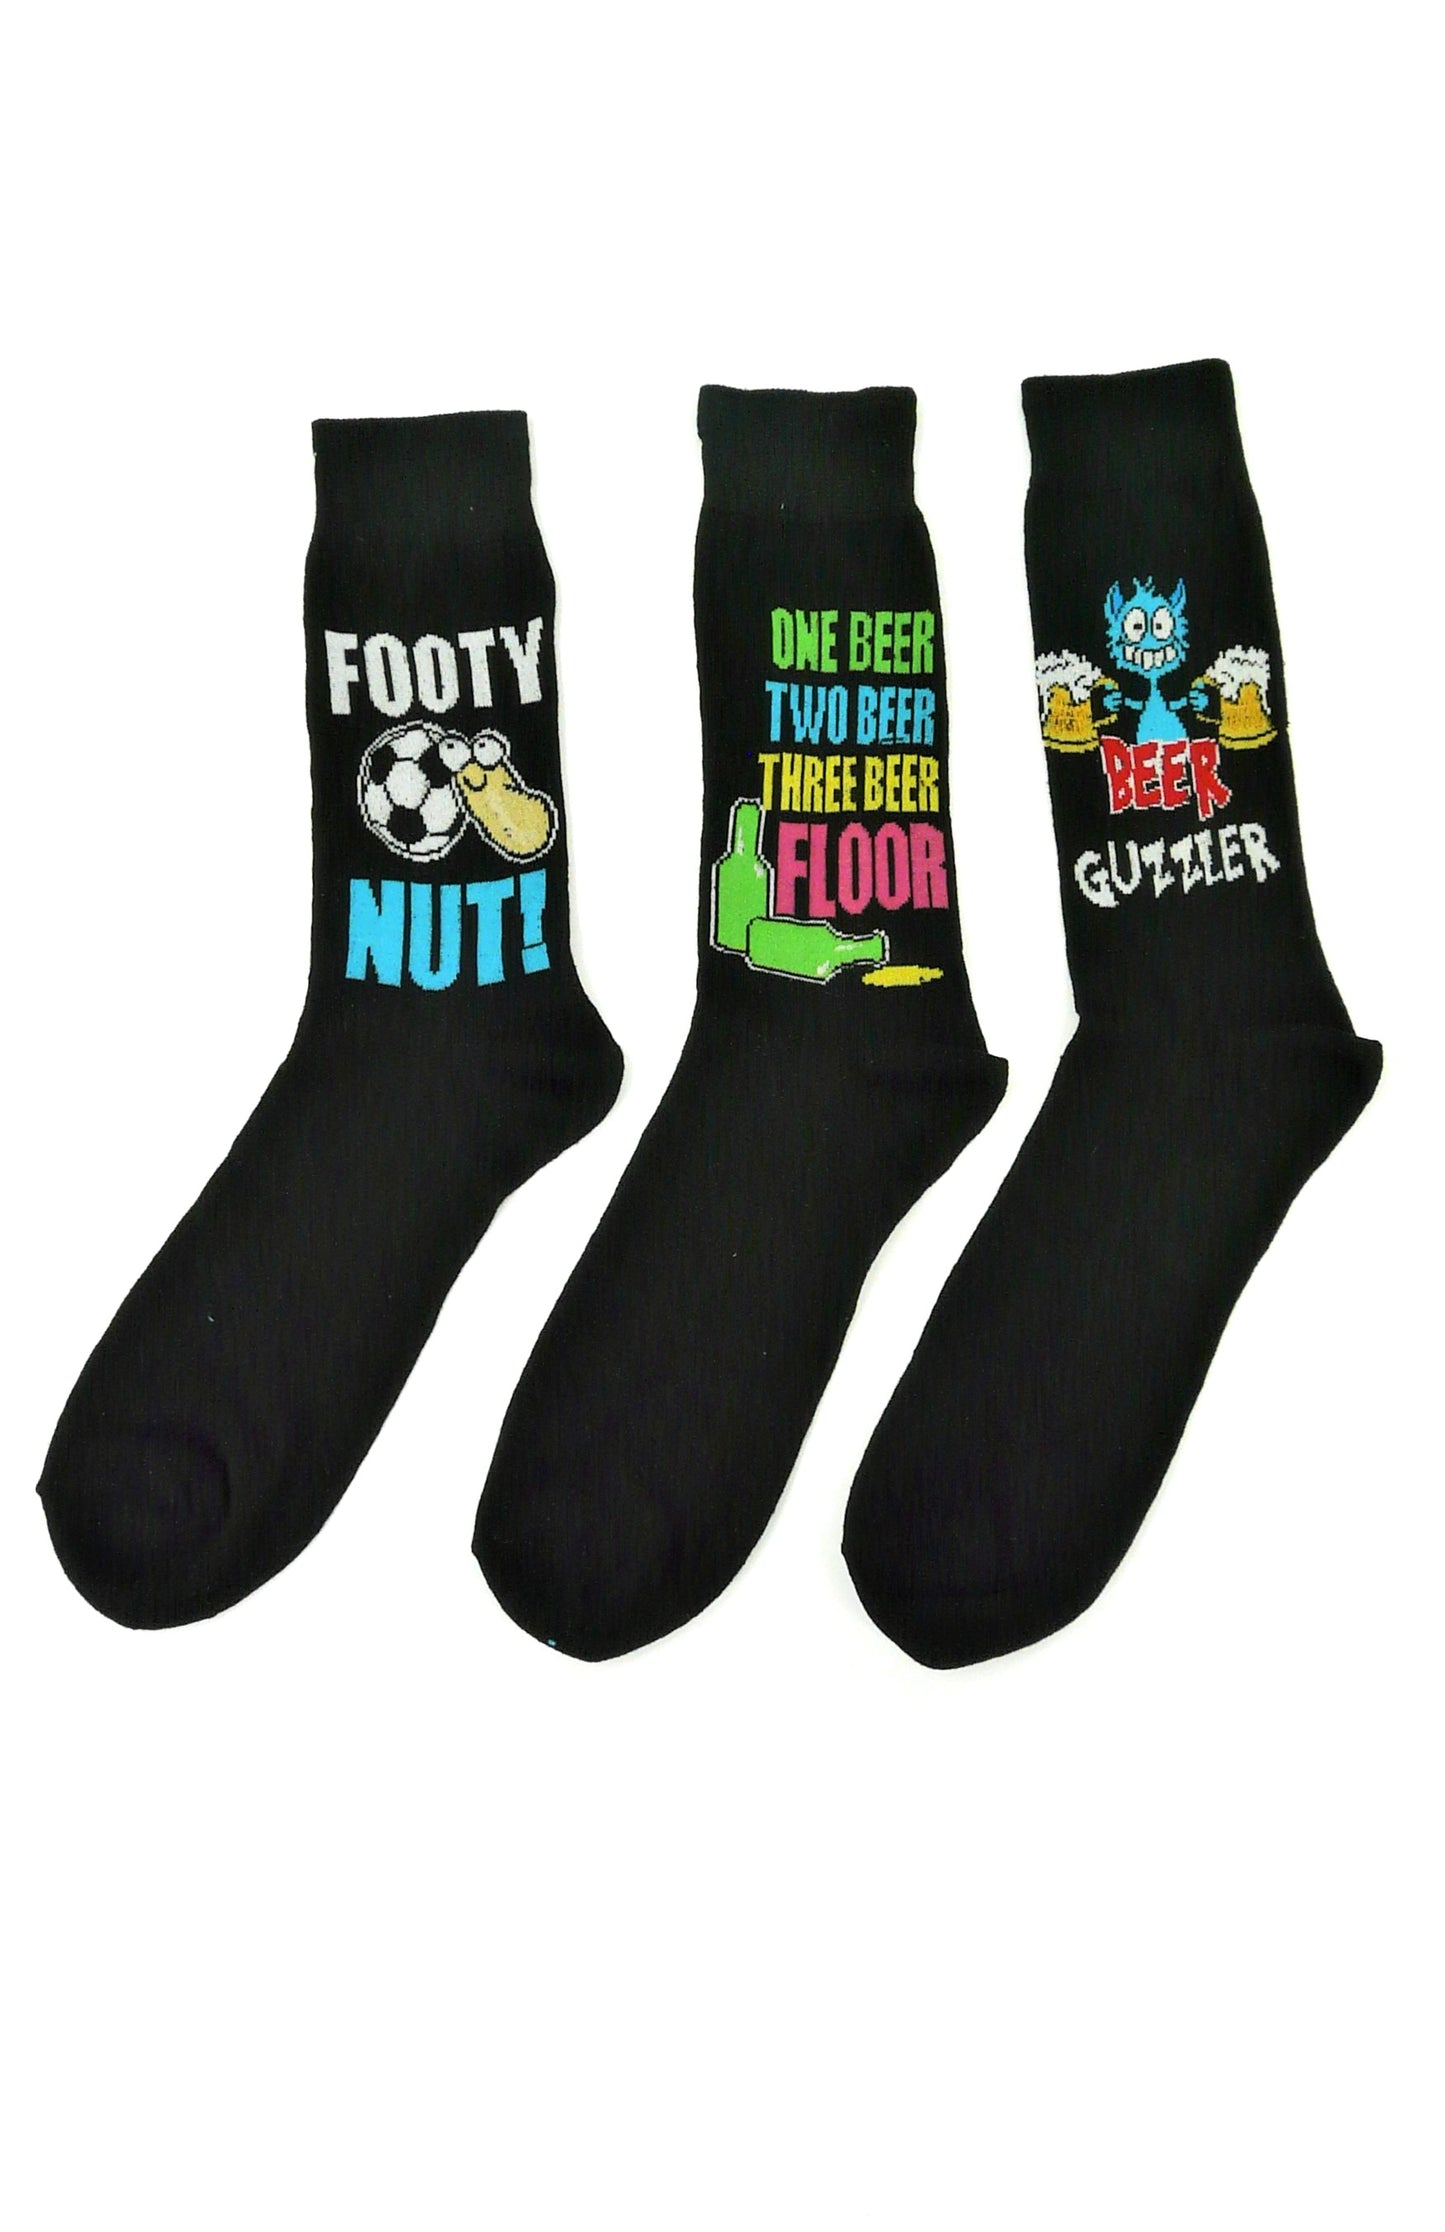 6 Pair’s Men's Novelty Fun Socks size 6-11